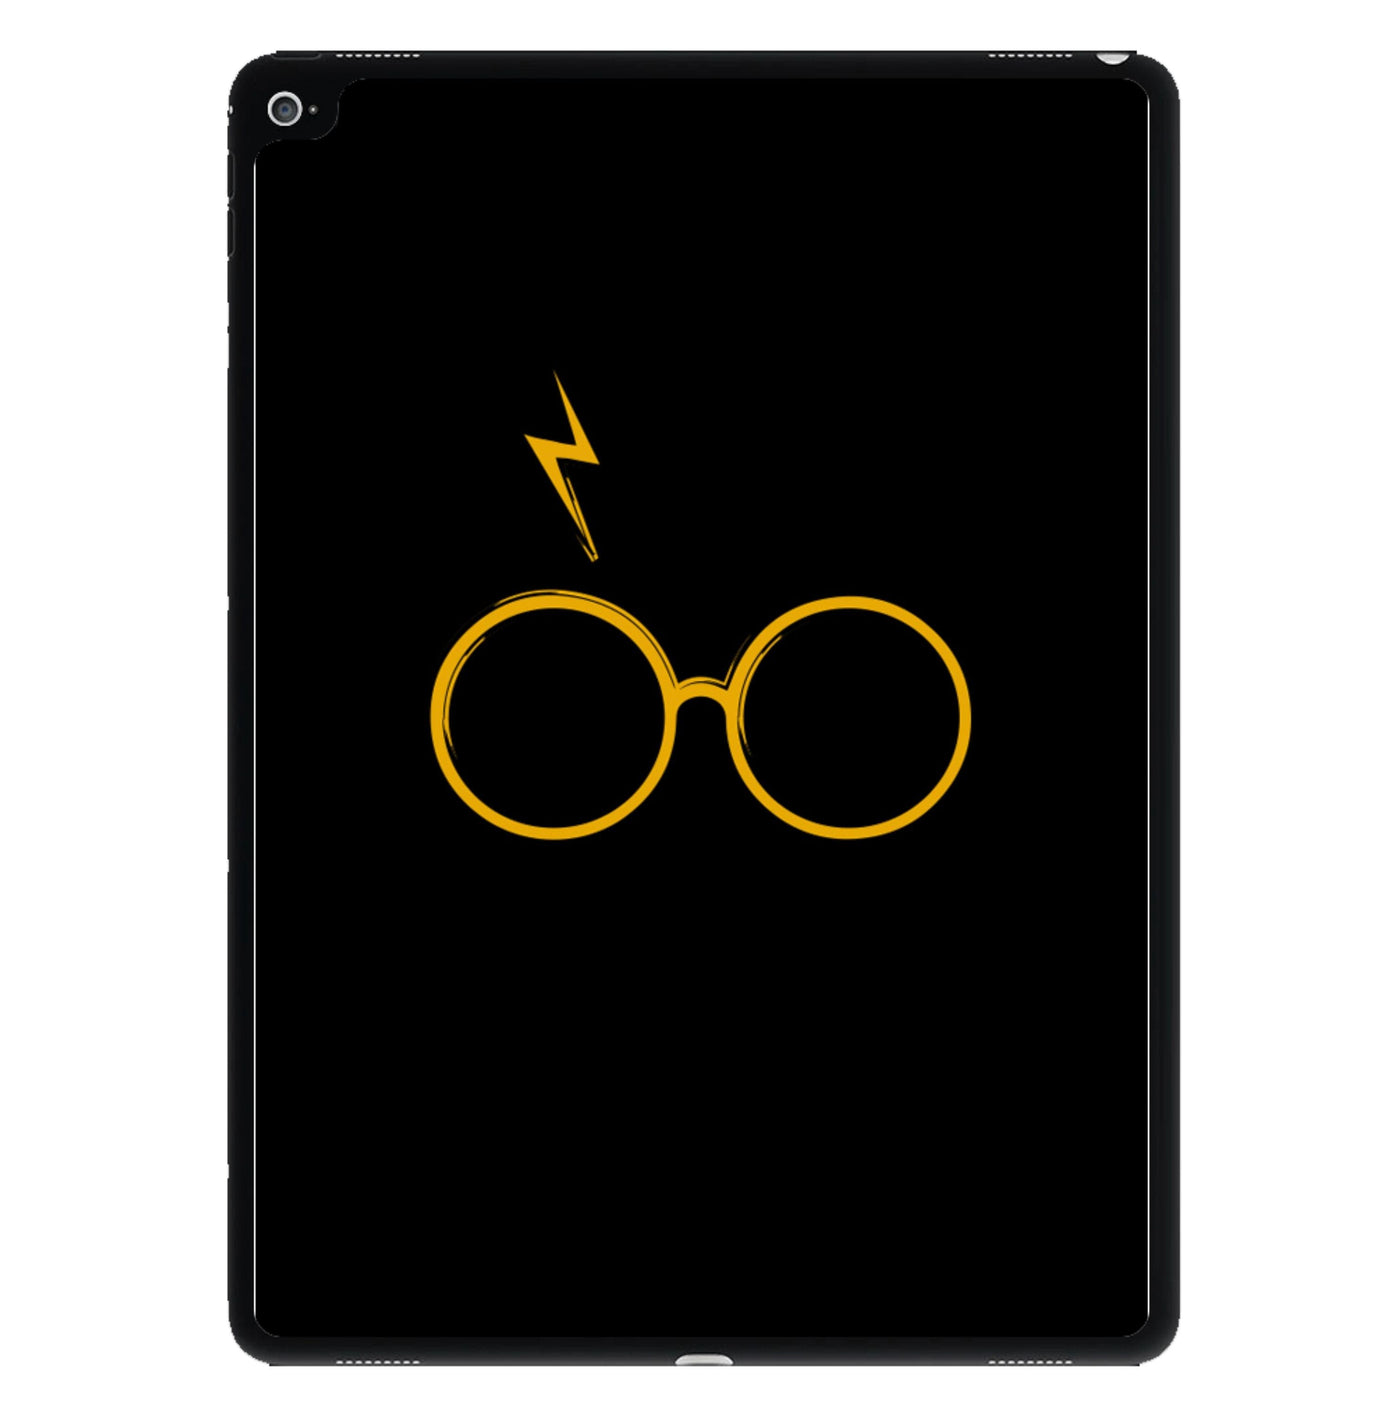 Glasses & Scar - Harry Potter iPad Case